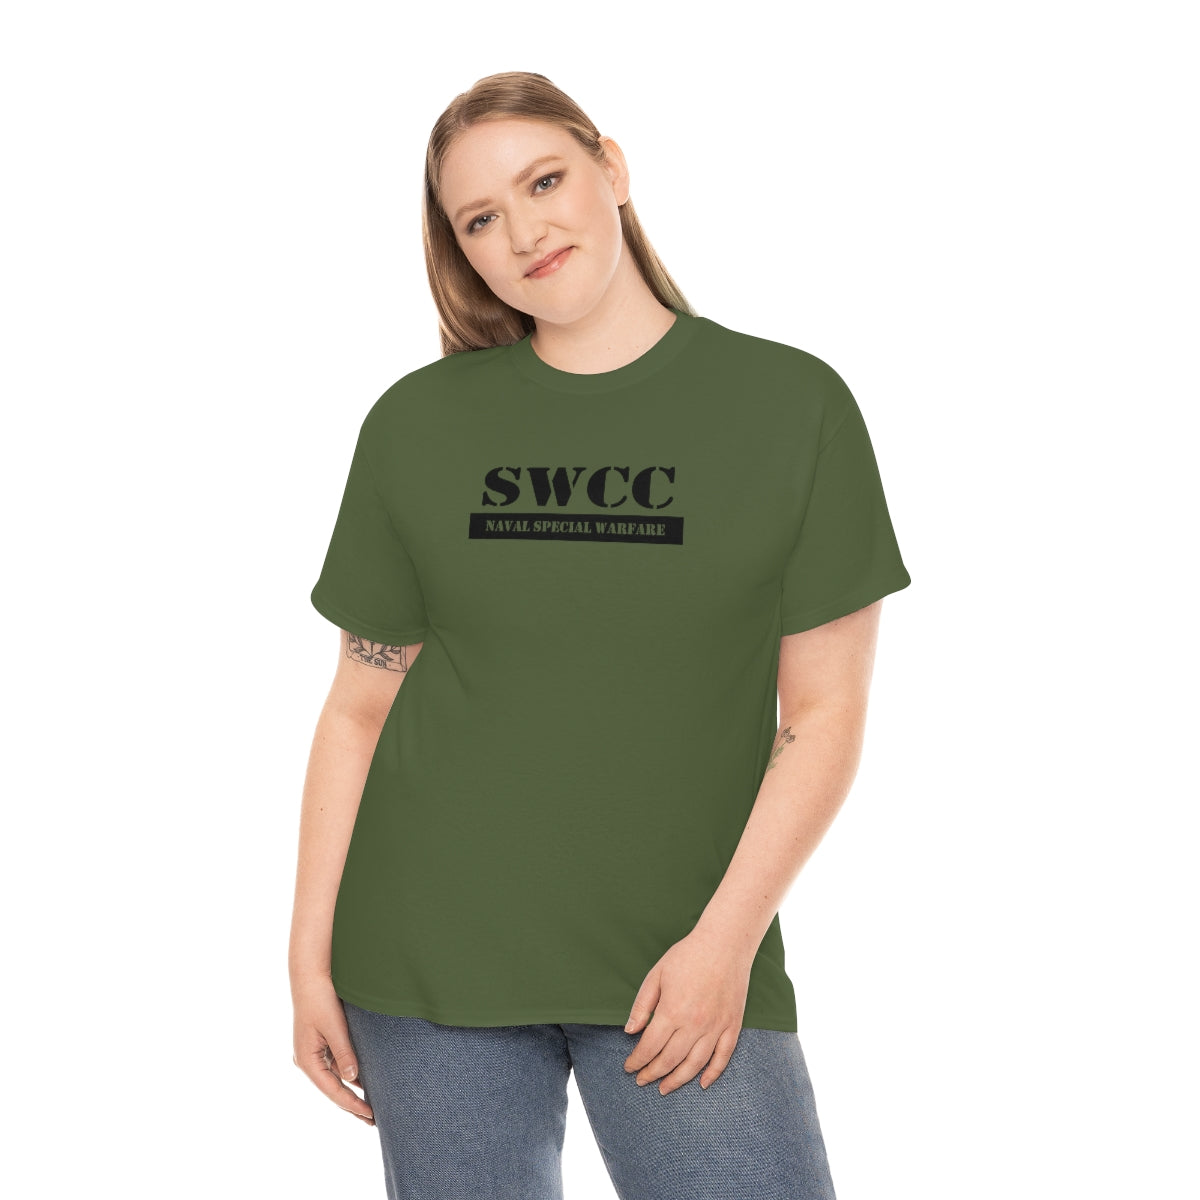 SWCC T-Shirt (Black)